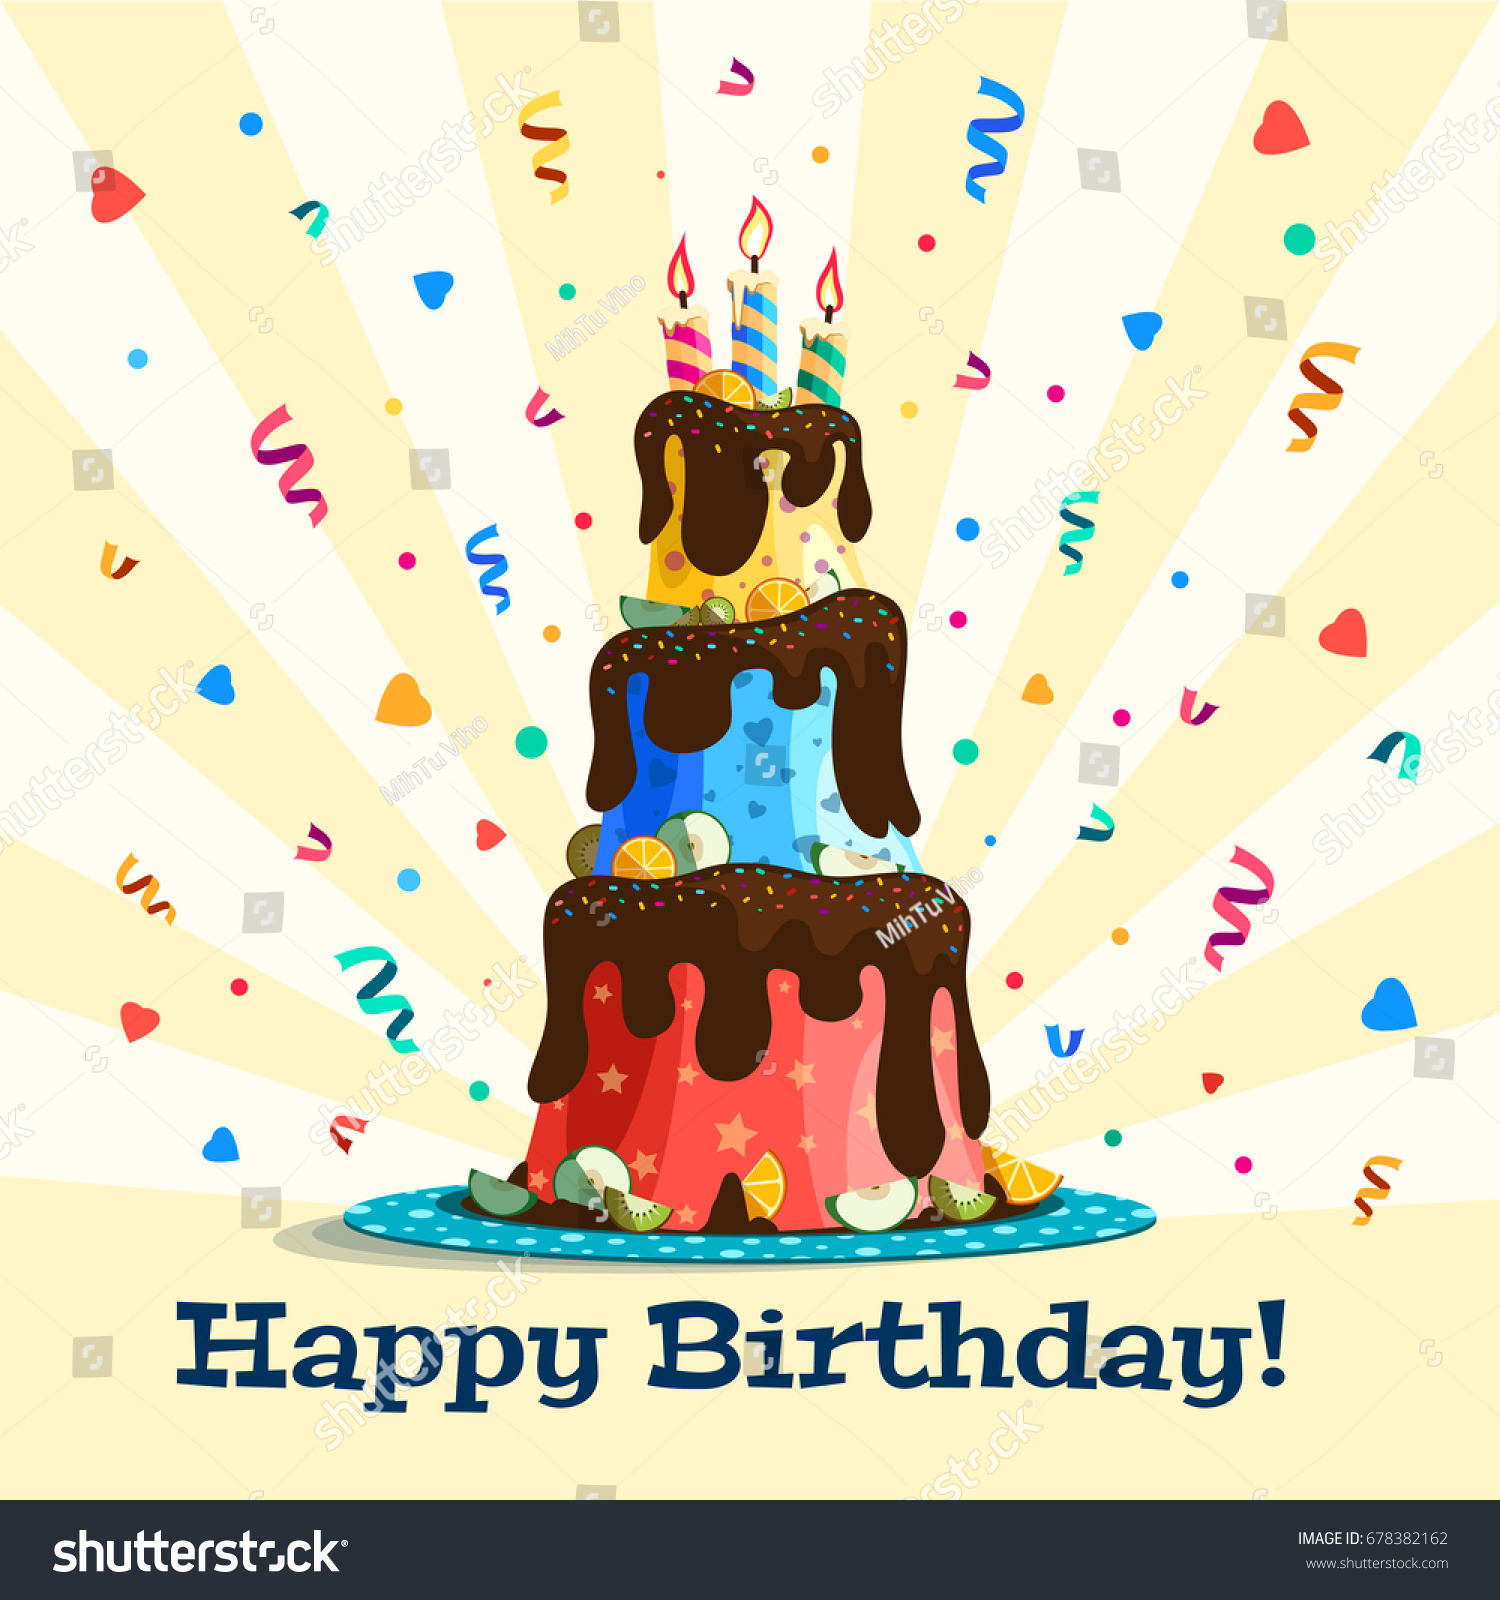 Happy Birthday Colorful Card Design Vector Stock Vector (Royalty Free ...